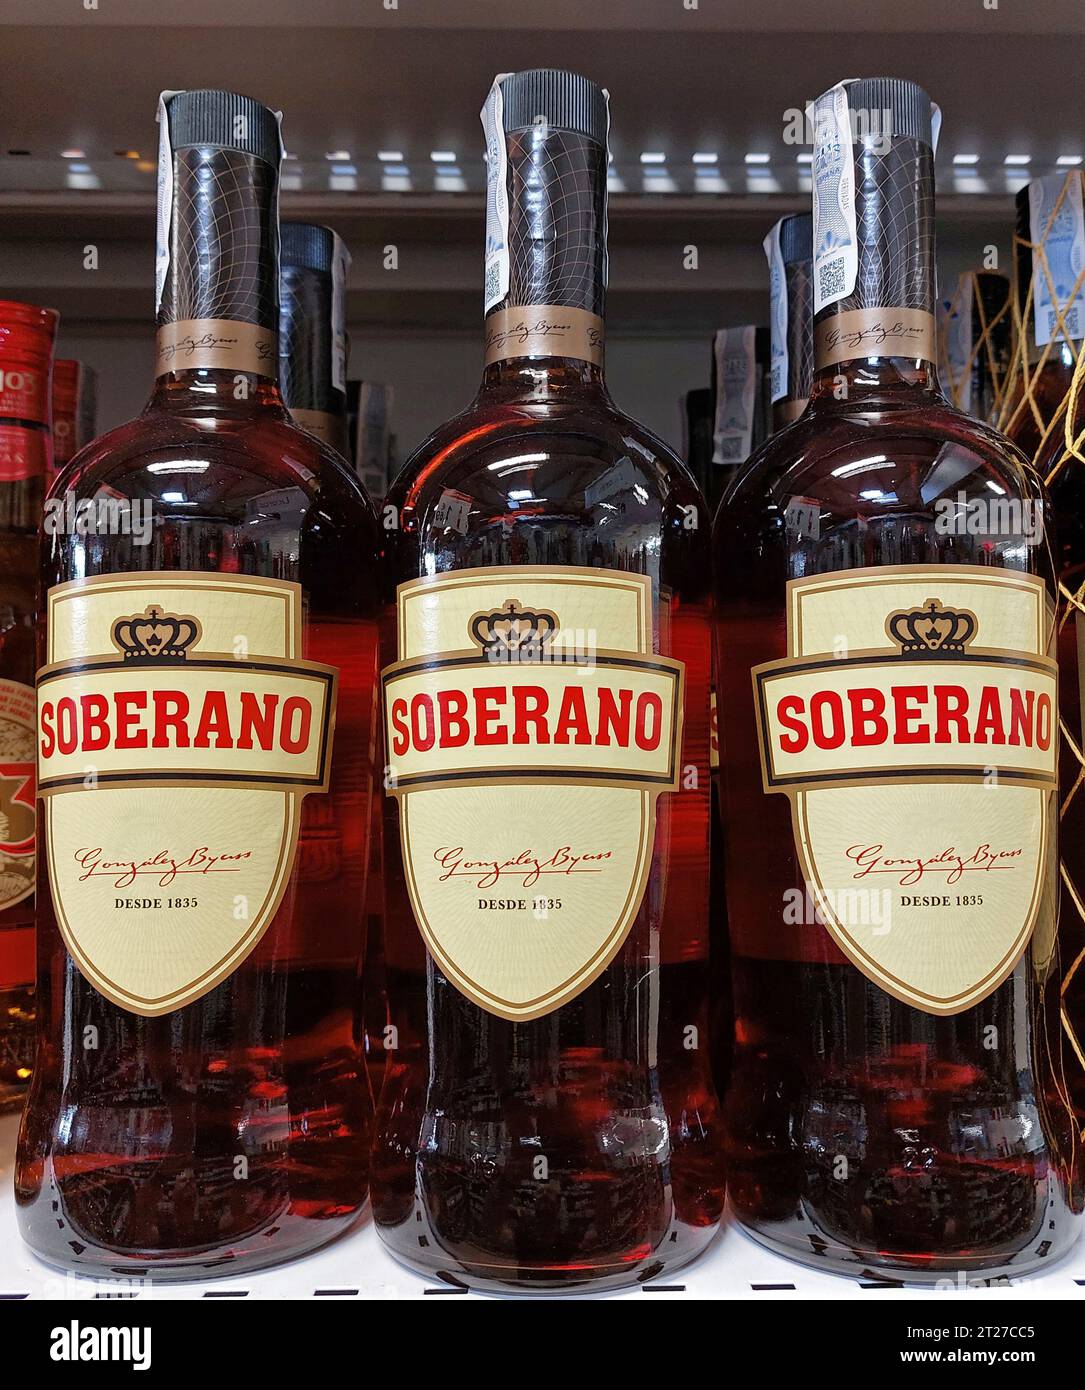 Soberano brandy bottles in a supermarket Stock Photo